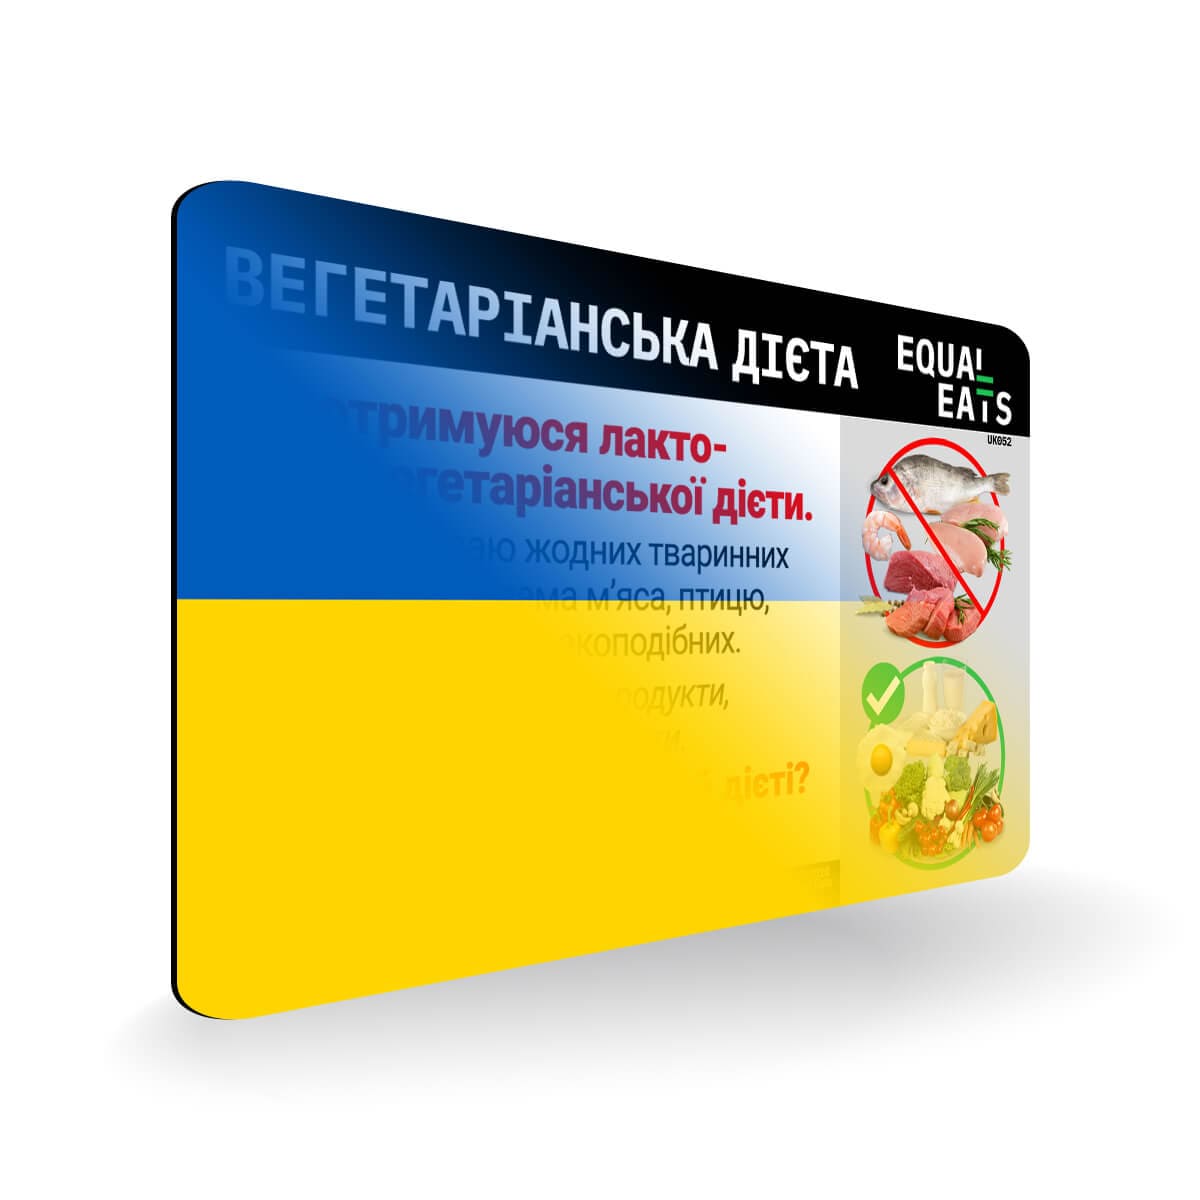 Lacto Ovo Vegetarian Diet in Ukrainian. Vegetarian Card for Ukraine